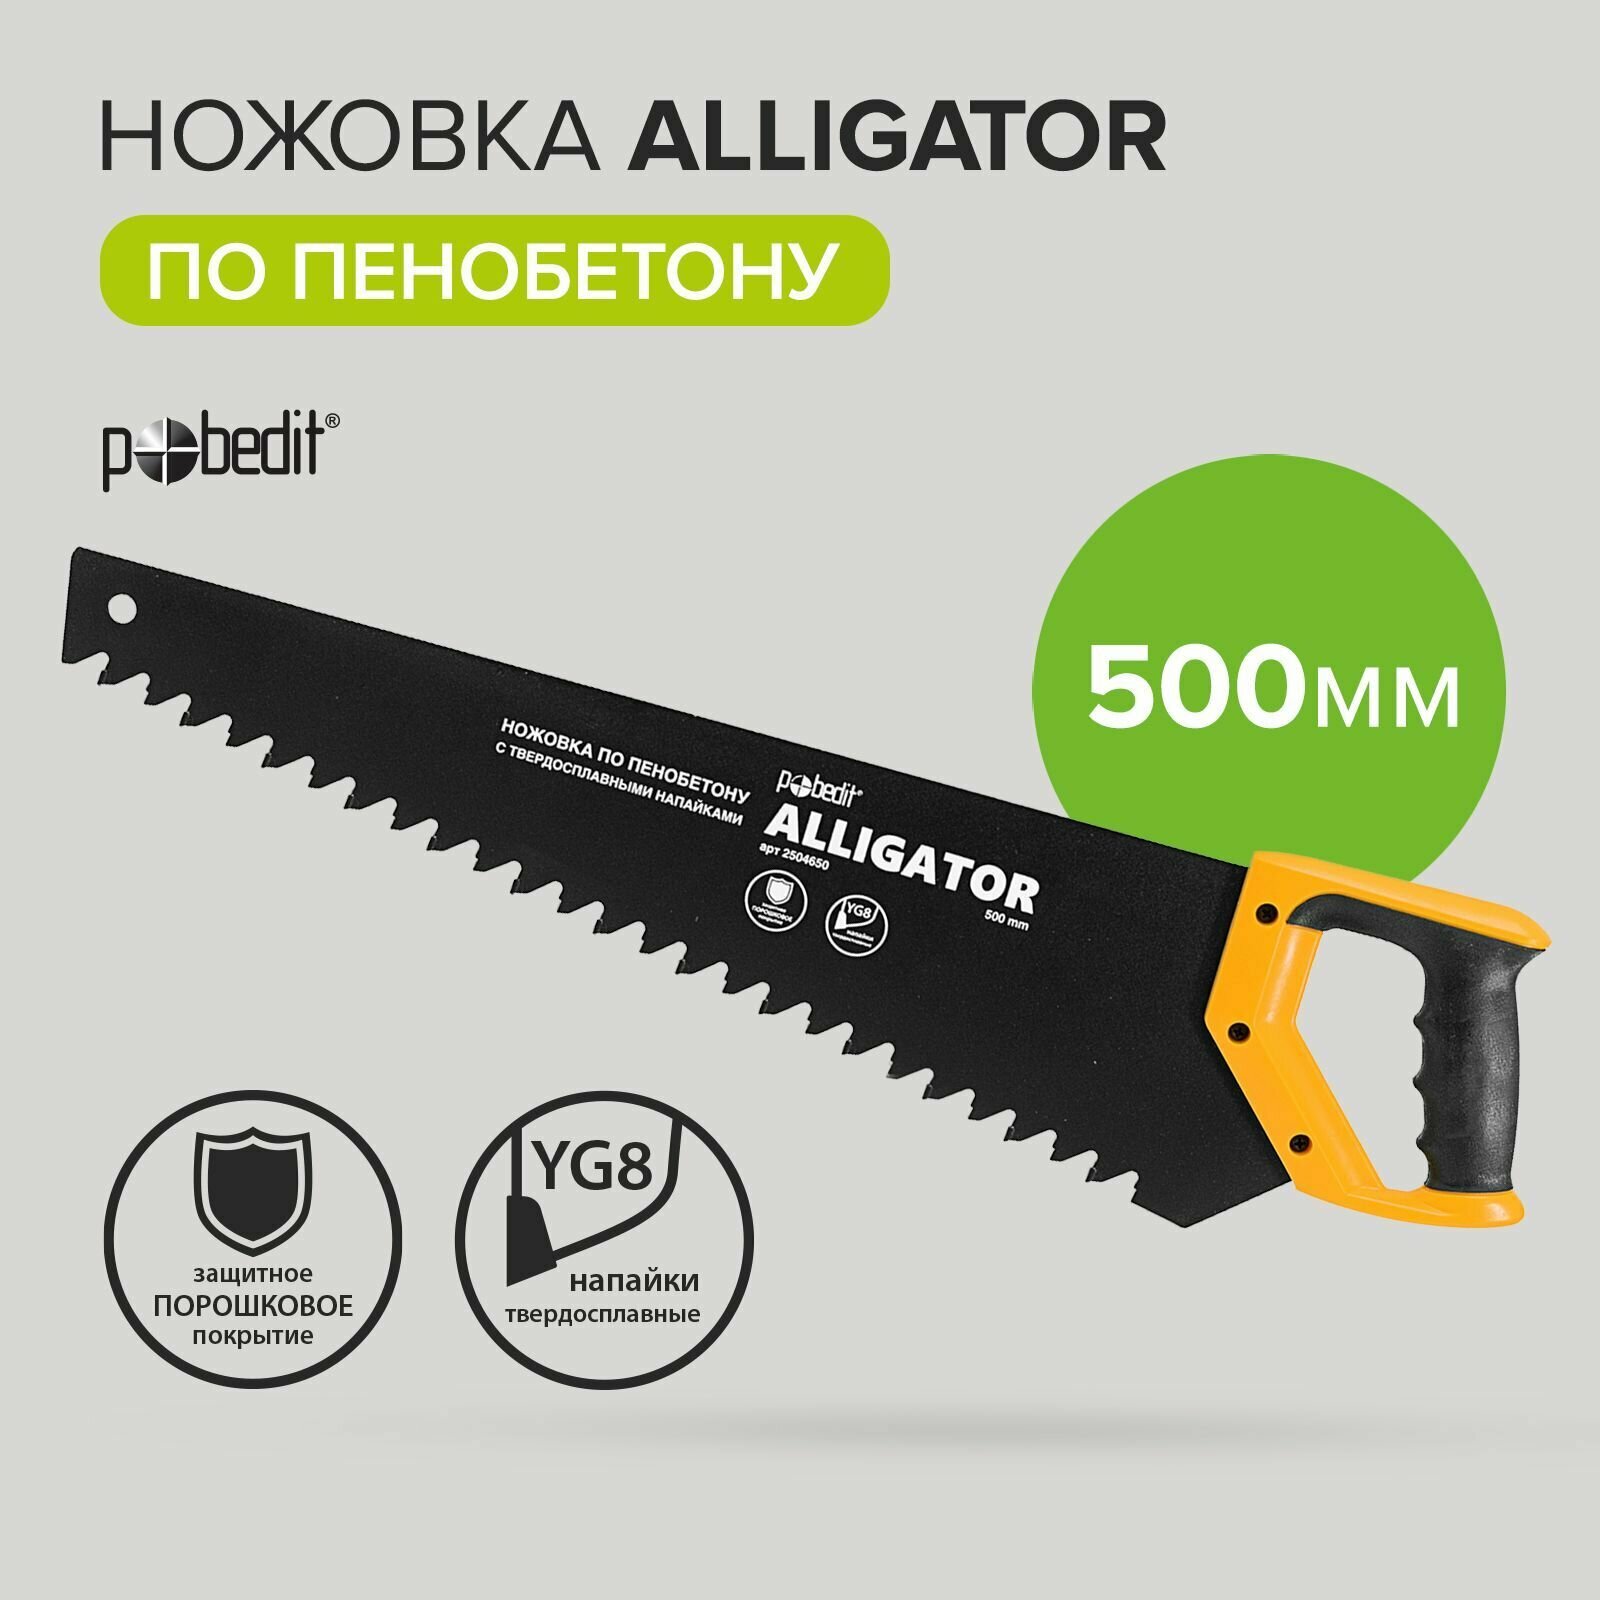 Ножовка по пенобетону Alligator 500 мм. Pobedit